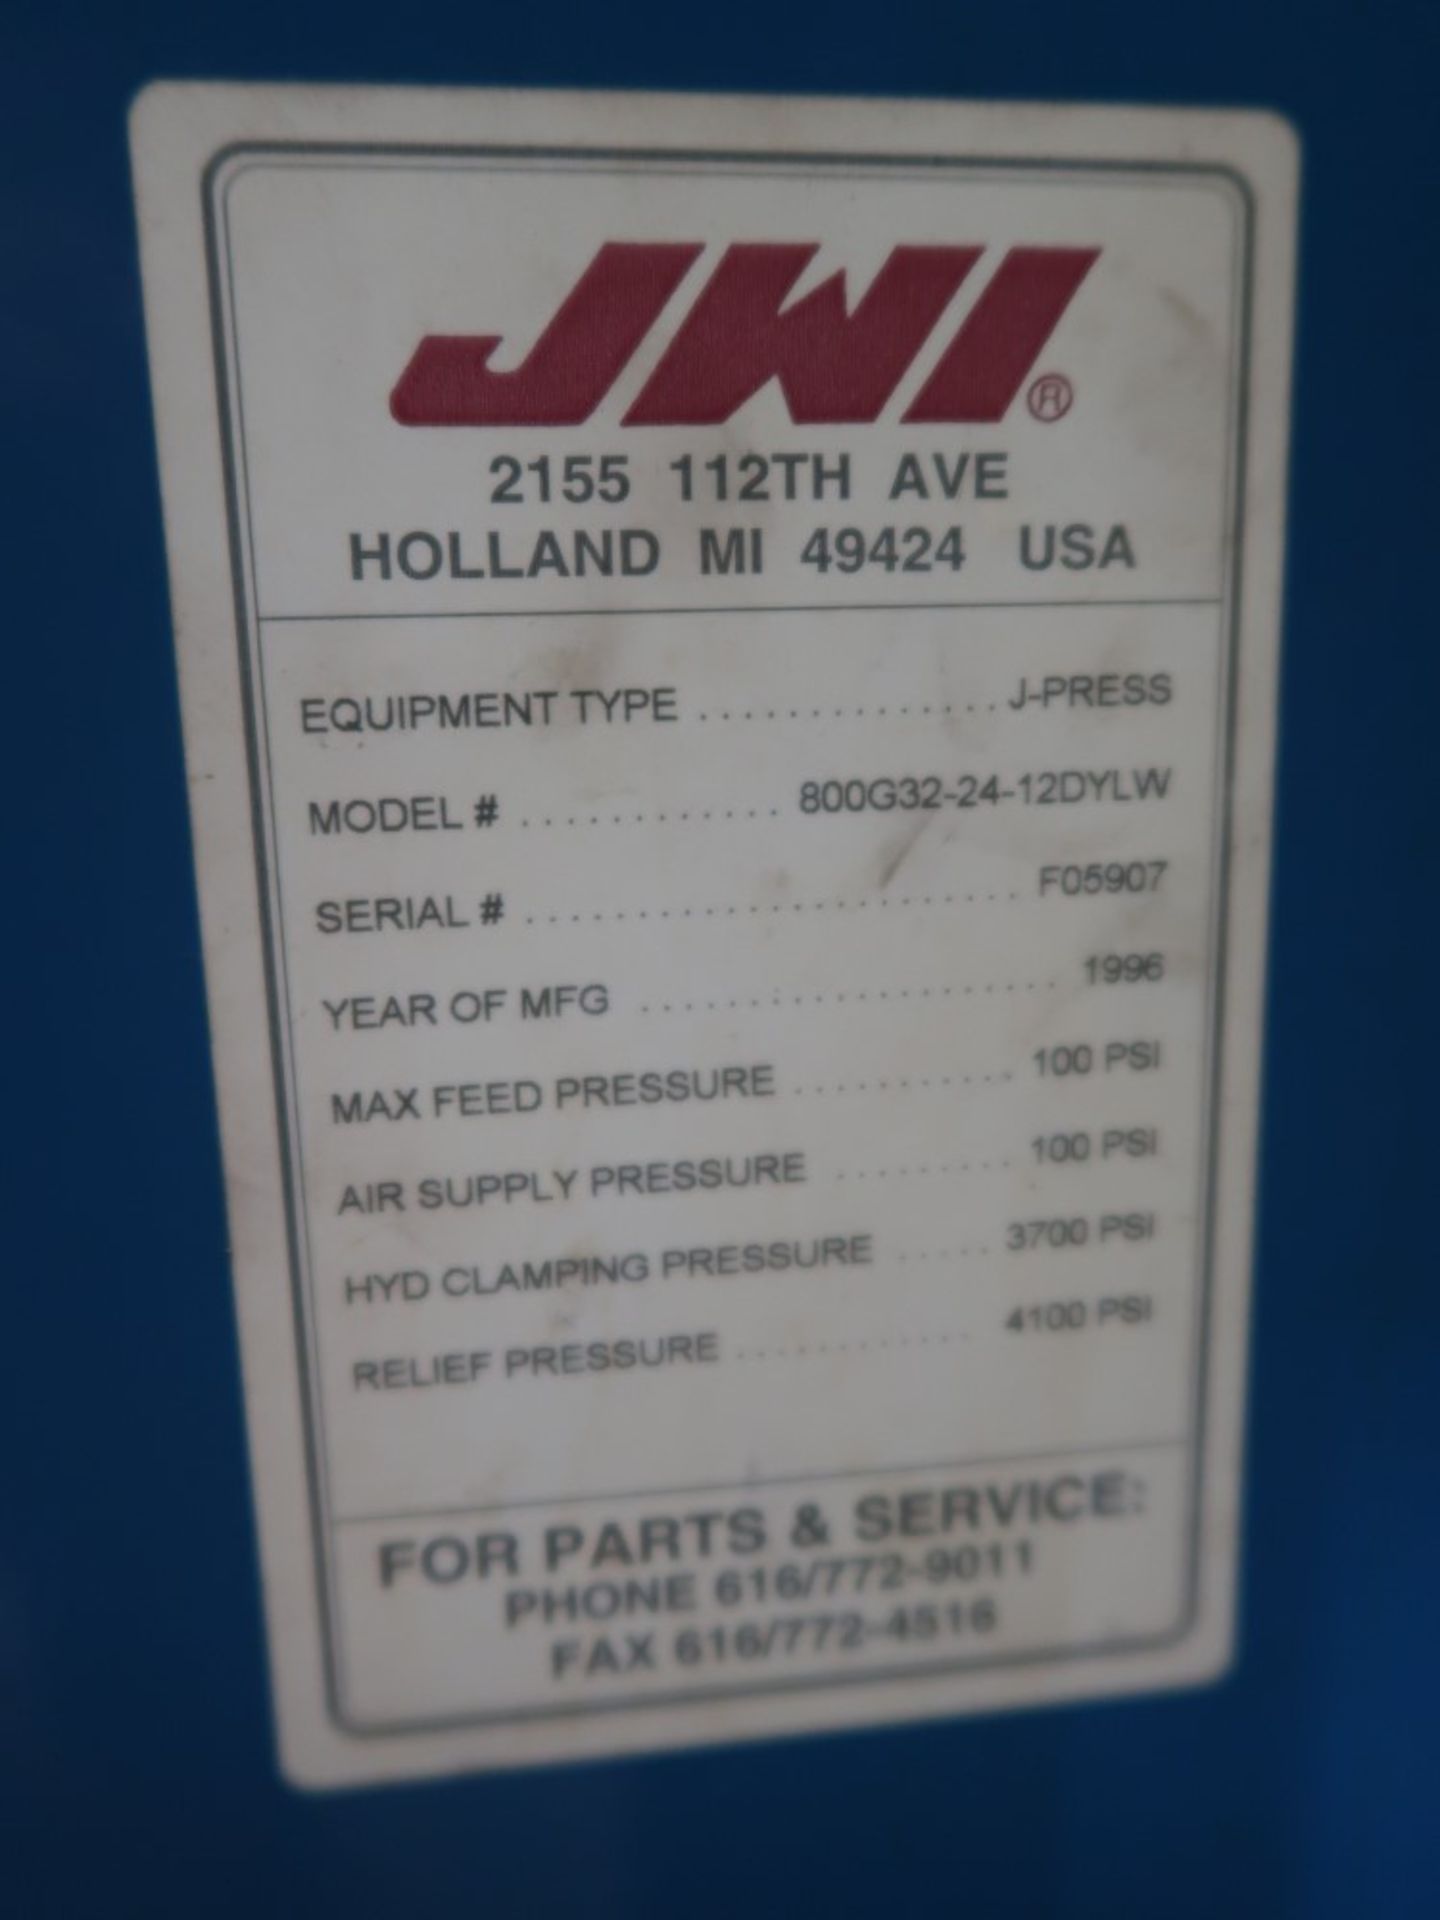 JWI J Press Filter Press Model 800G32-24-12DYLW S/N F05907 Max Feed Pressure 100 PSI, Air Supply - Image 8 of 8